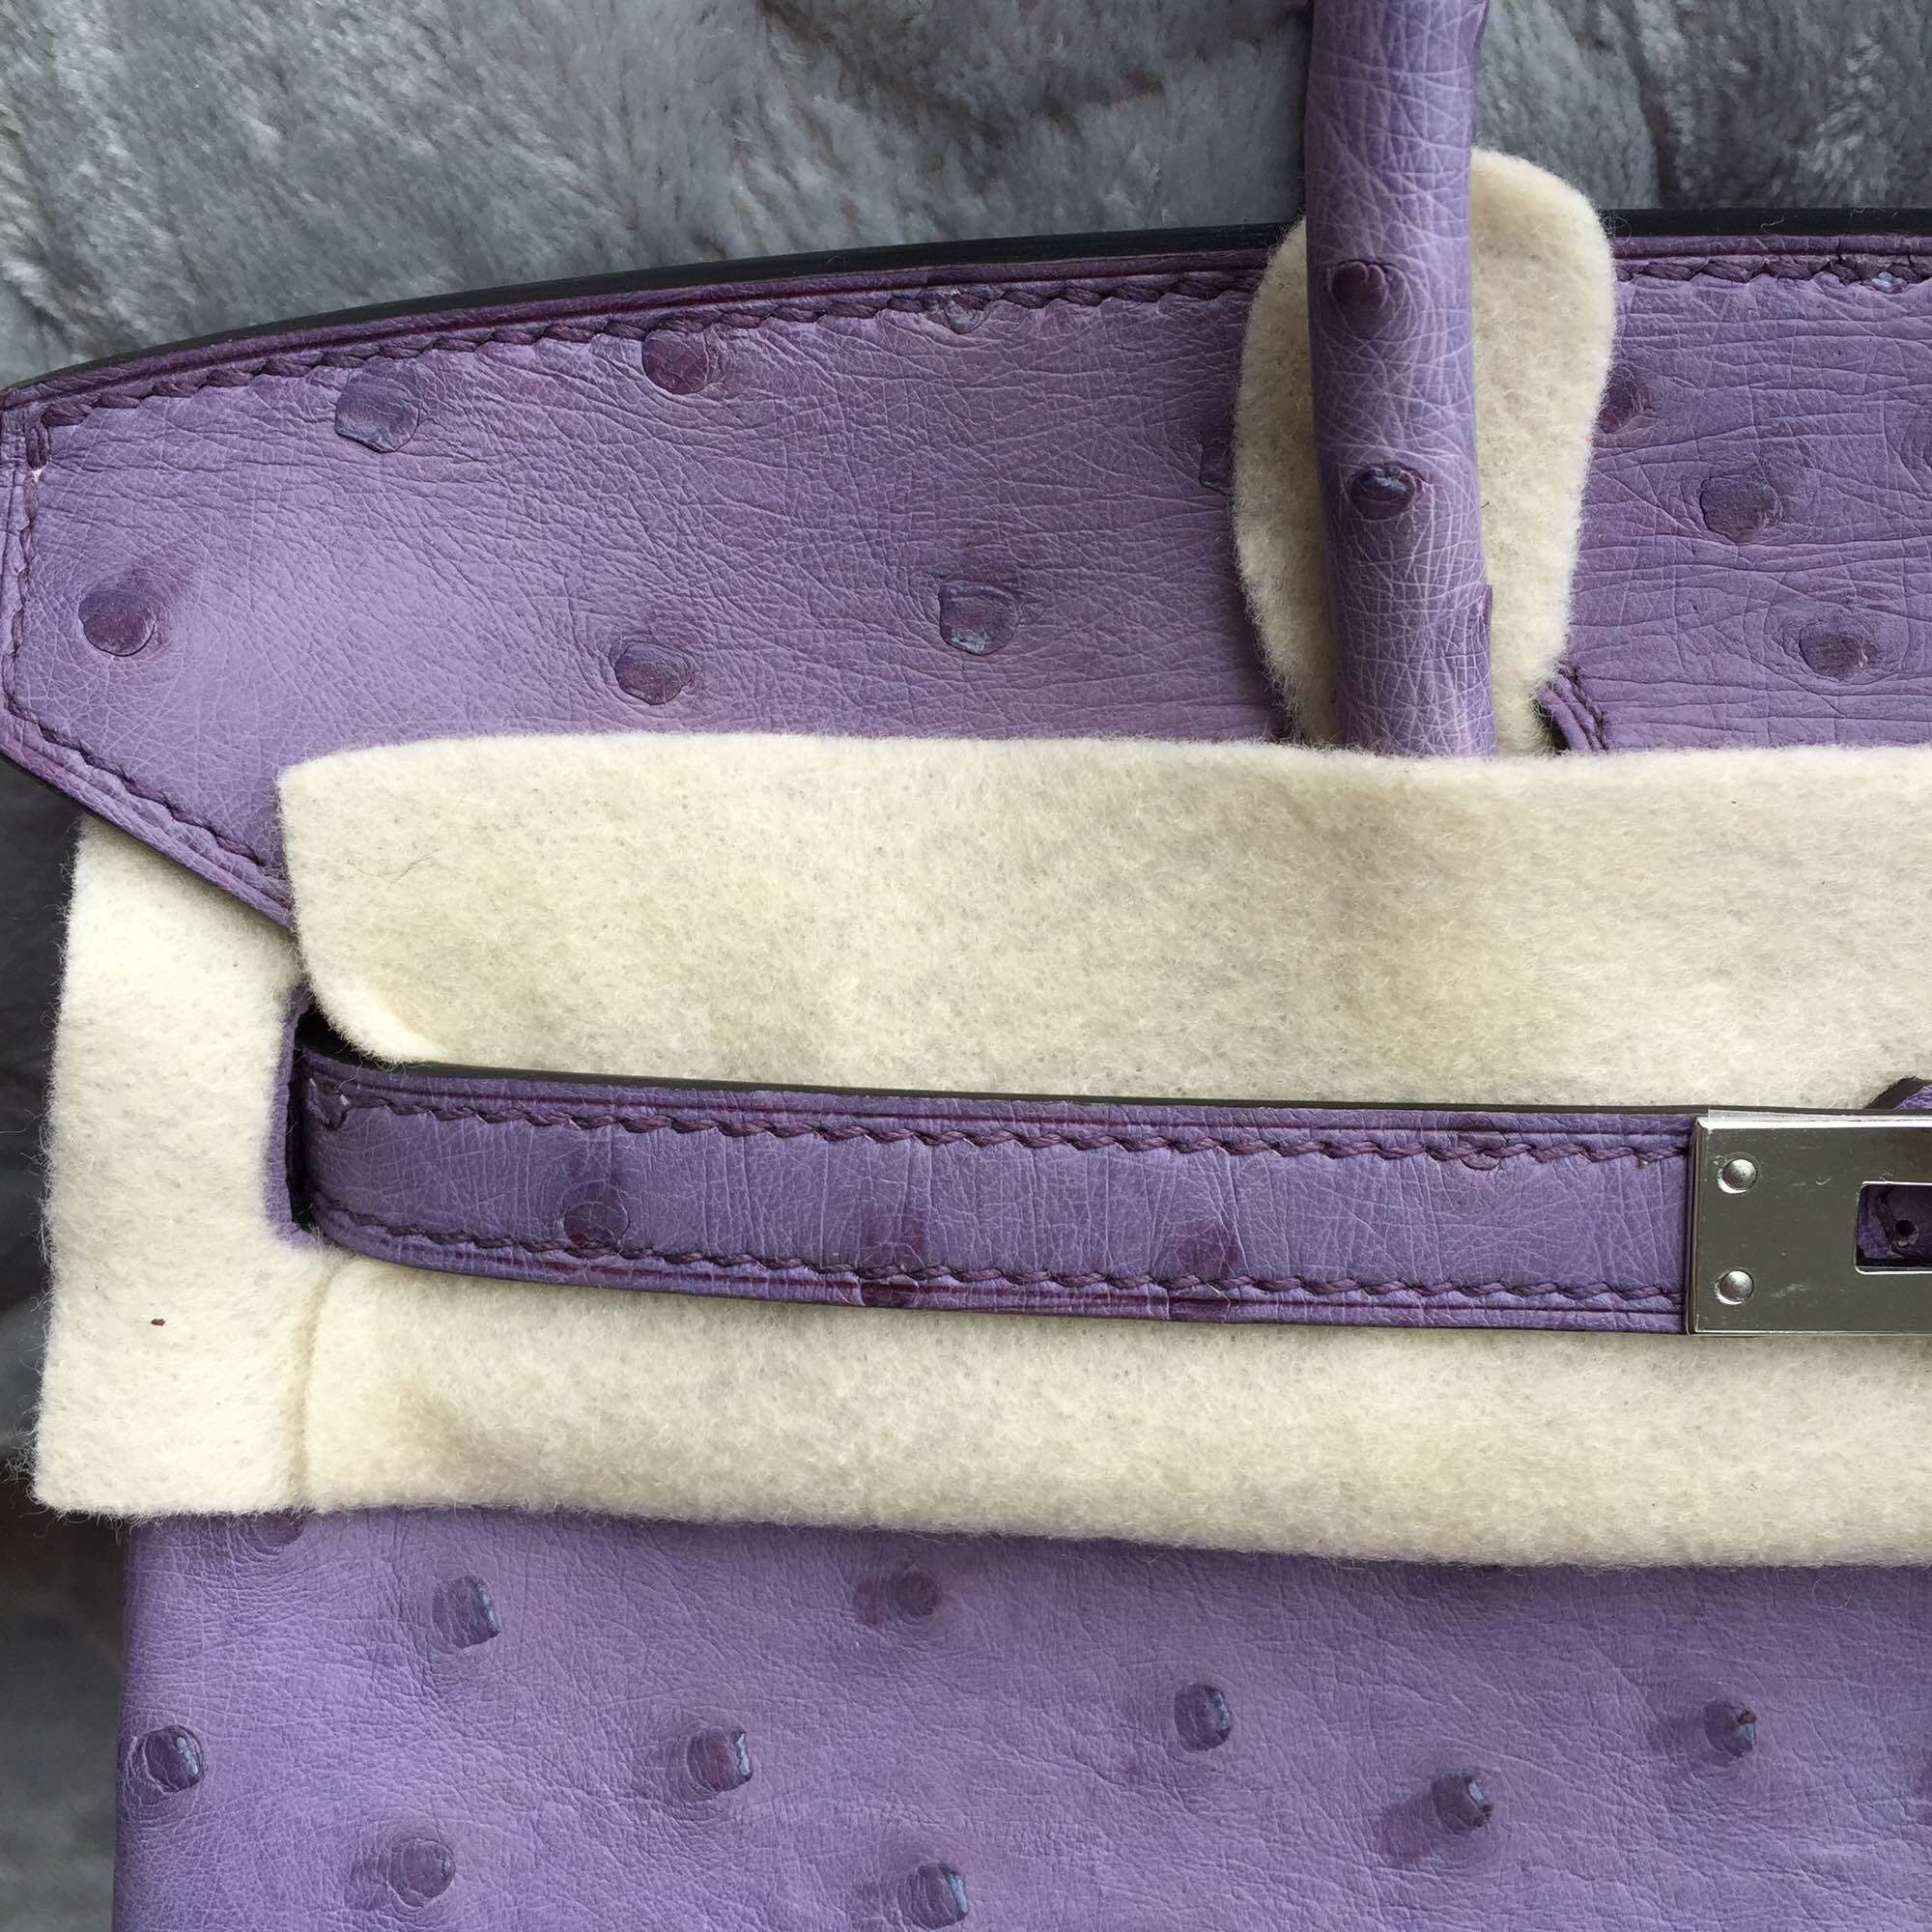 Discount 25CM Hermes Birkin Bag in Light Purple Ostrich Leather Silver Hardware